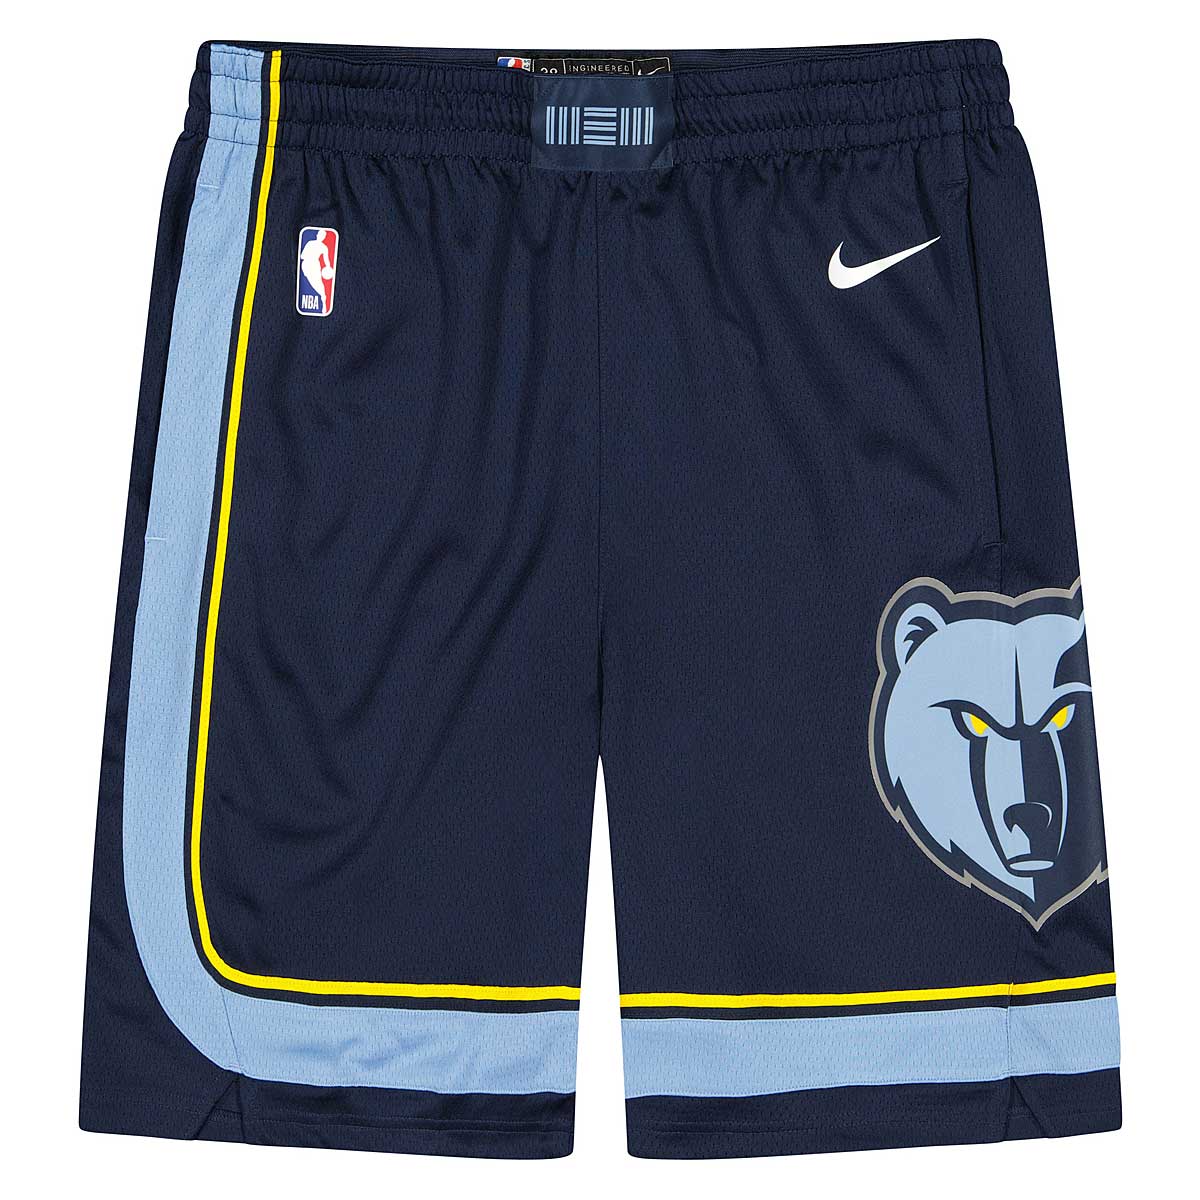 Nike NBA Memphis Grizzlies Dri-fit Icon Swingman Shorts, College Navy/light Blau/(weiß) S